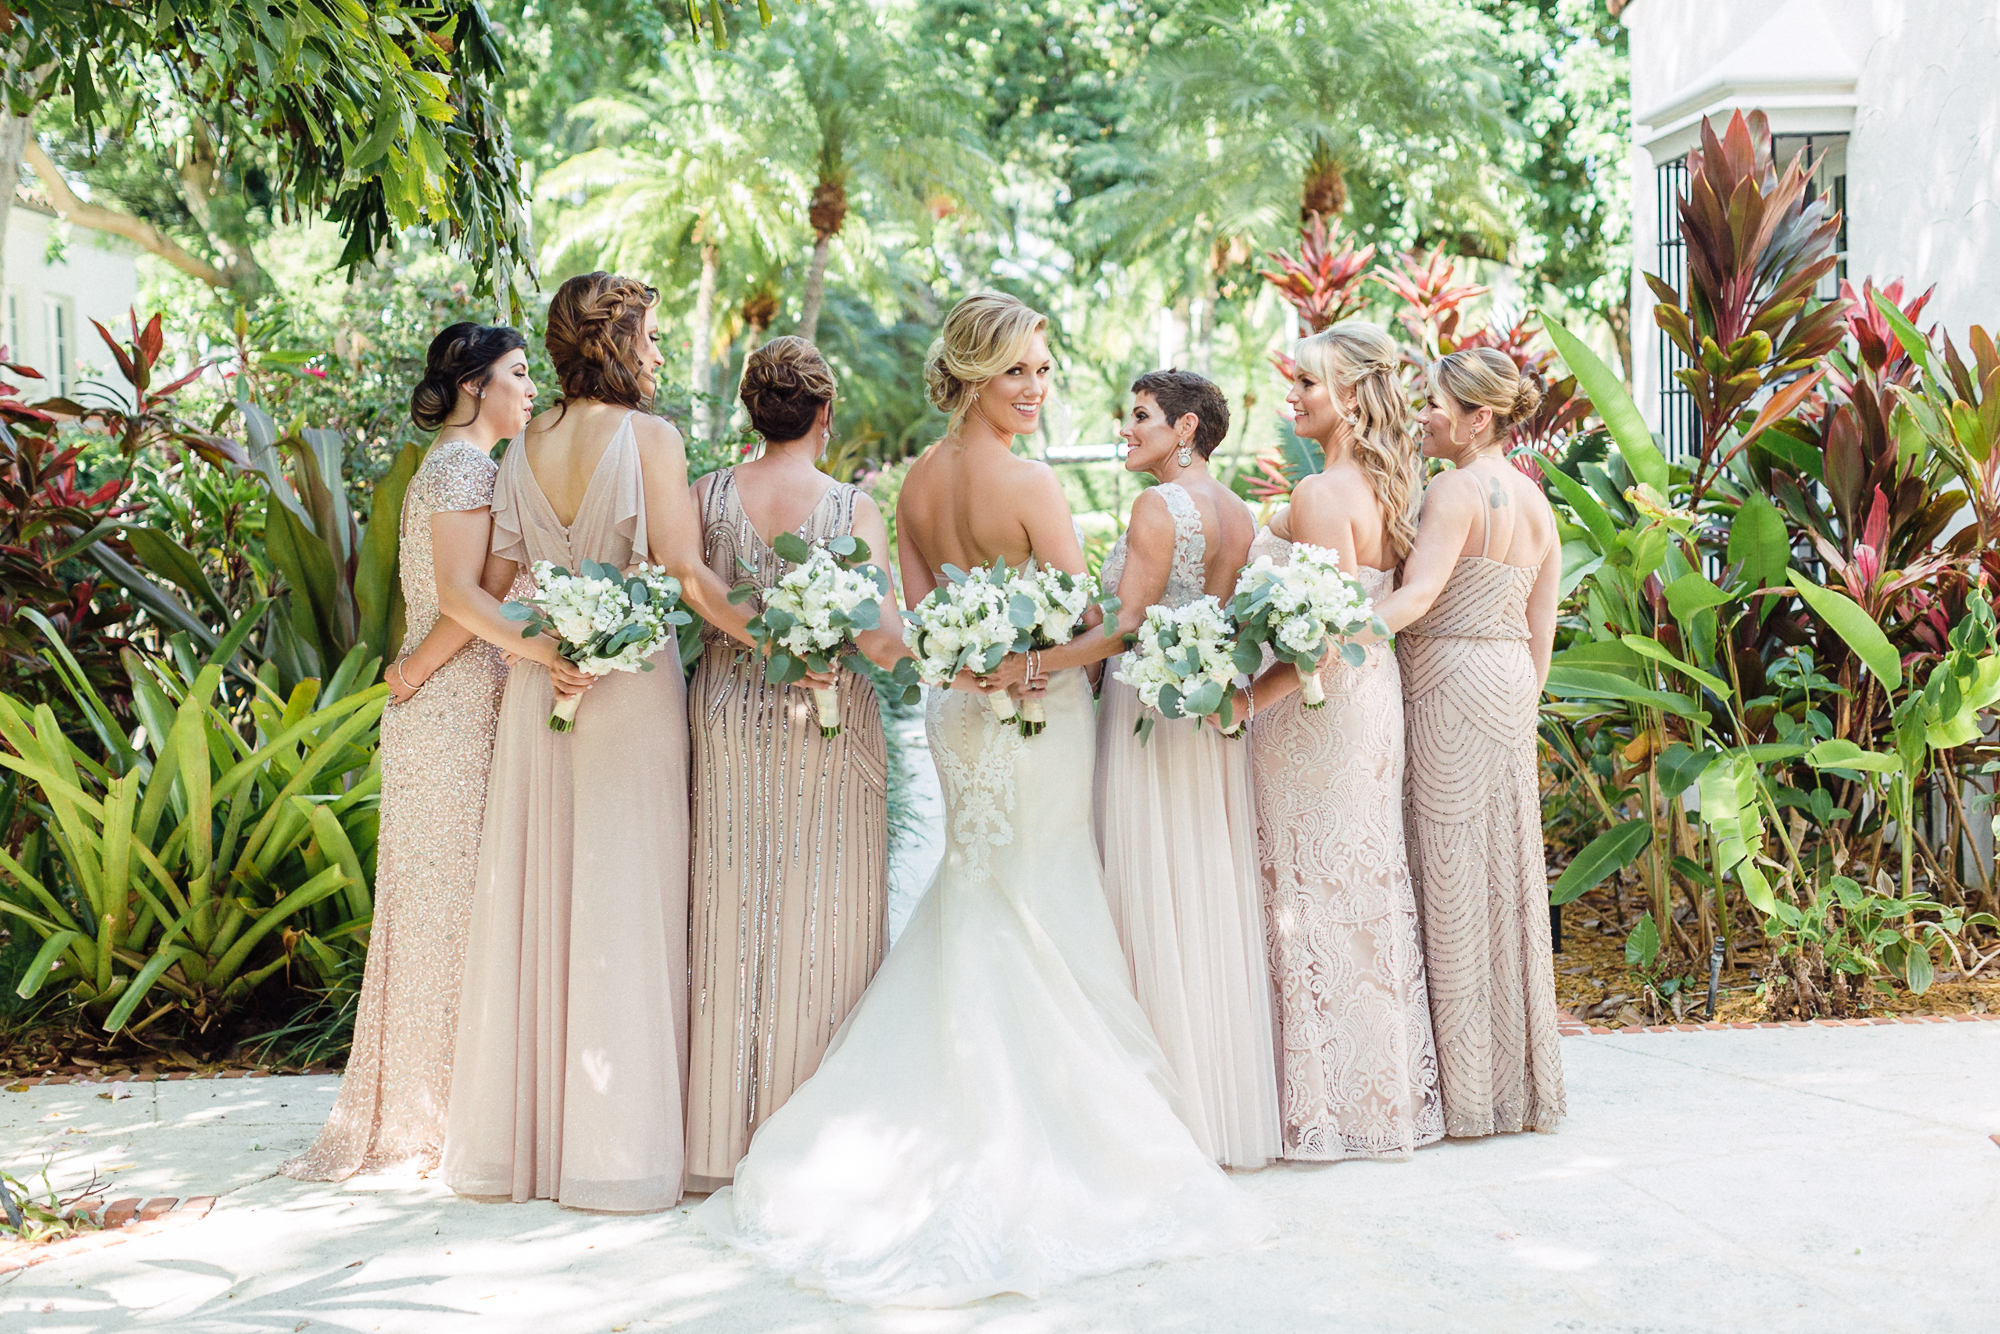 Mismatched bridesmaids dresses, champagne and blush, eucalyptus bouquet. Must have bride and bridesmaids photo